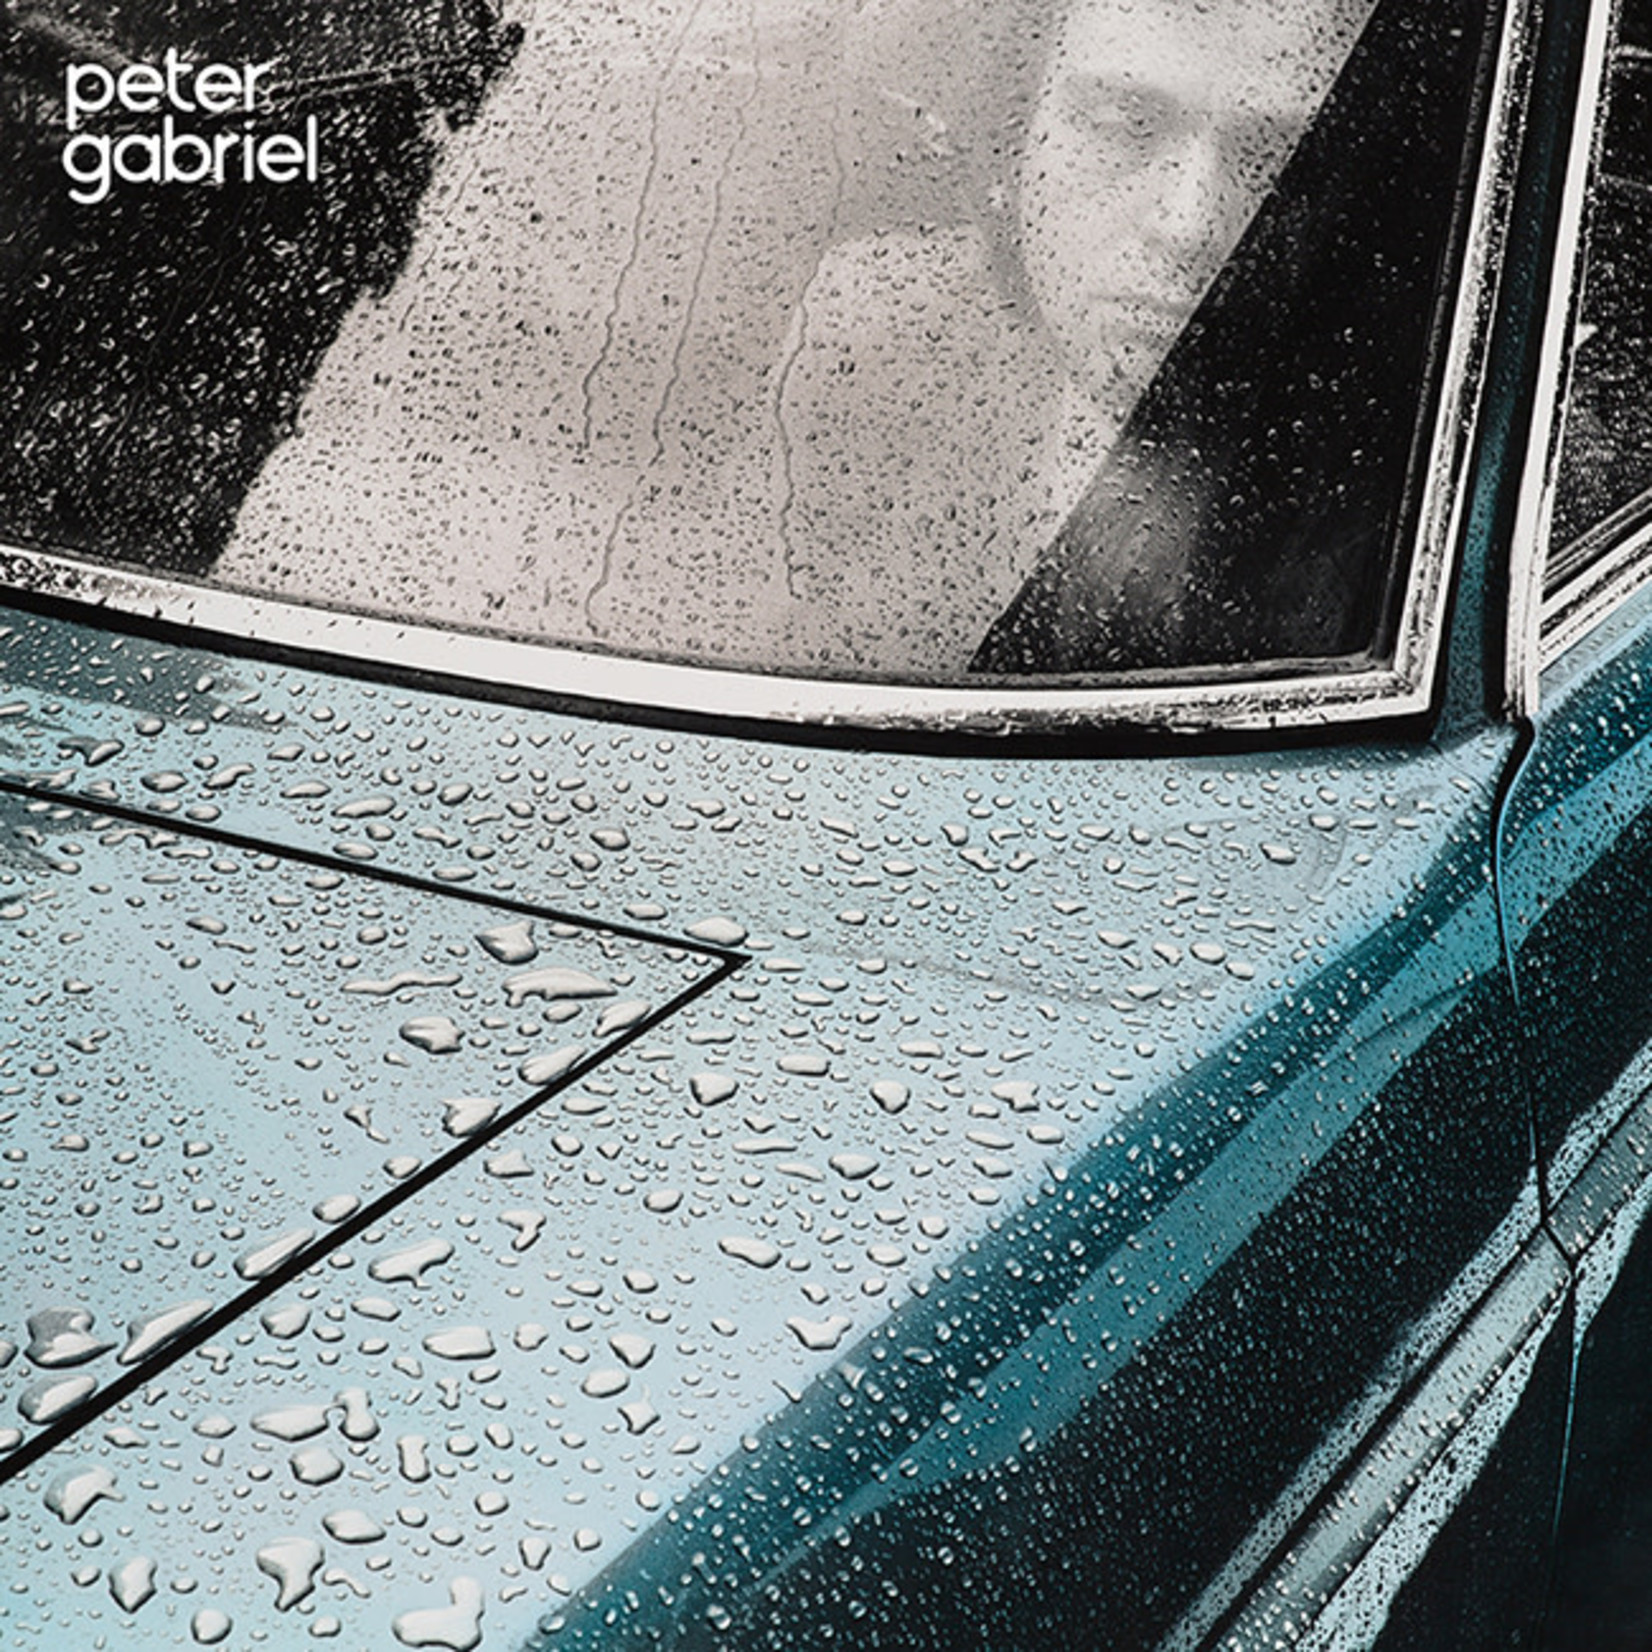 [New] Peter Gabriel - self-titled